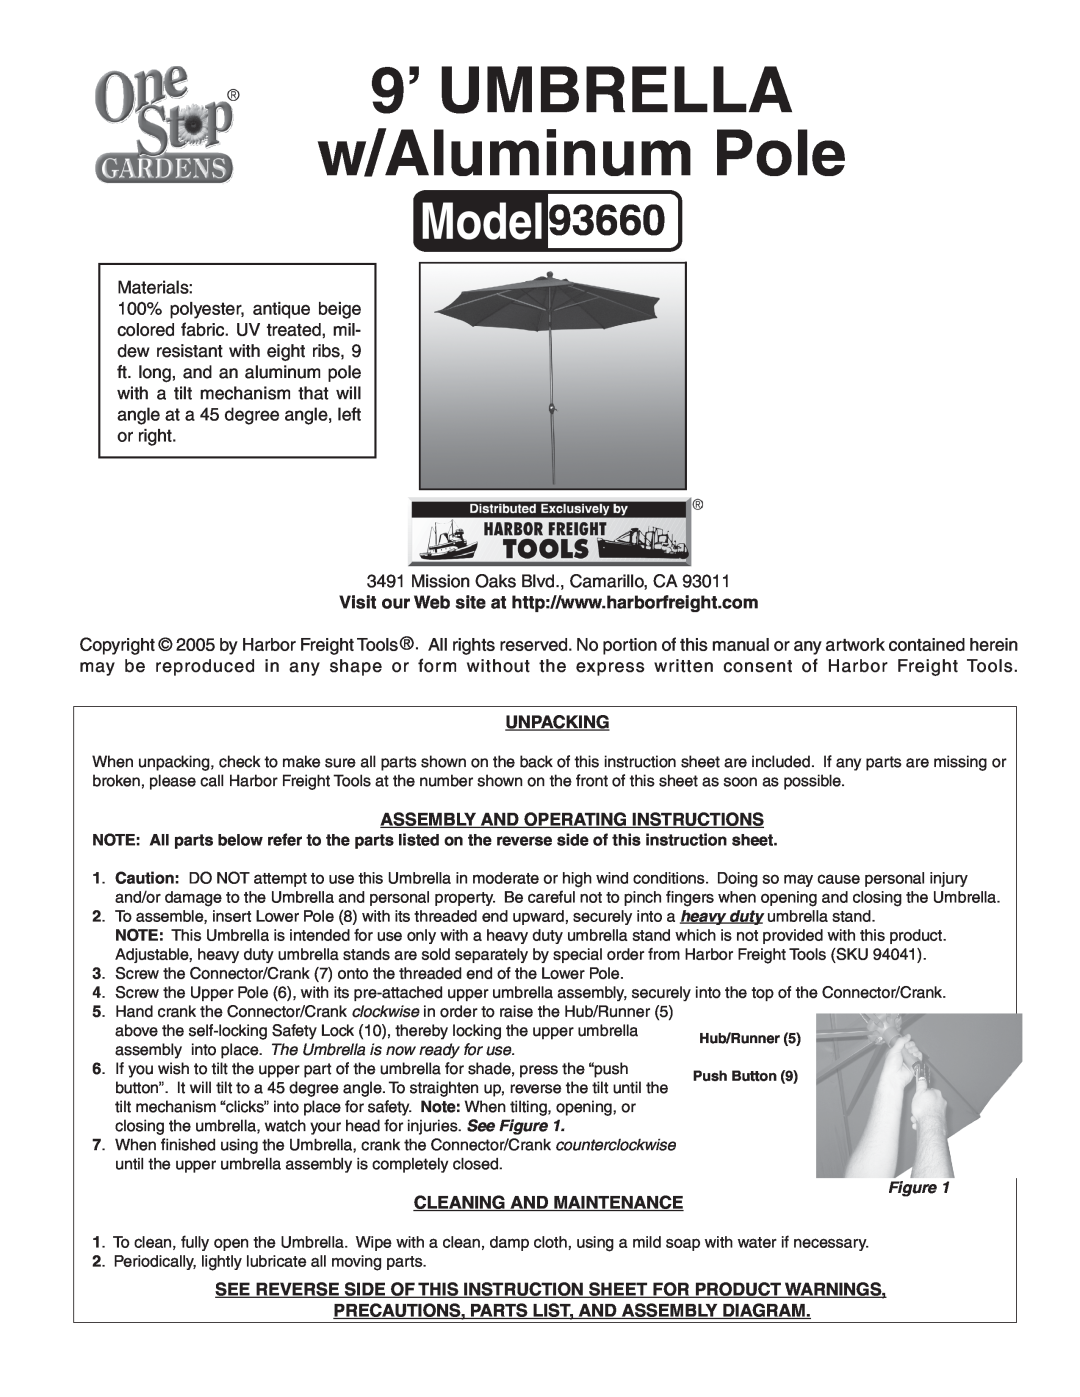 Harbor Freight Tools 93660 instruction sheet 9’ UMBRELLA w/Aluminum Pole, Materials, Mission Oaks Blvd., Camarillo, CA 